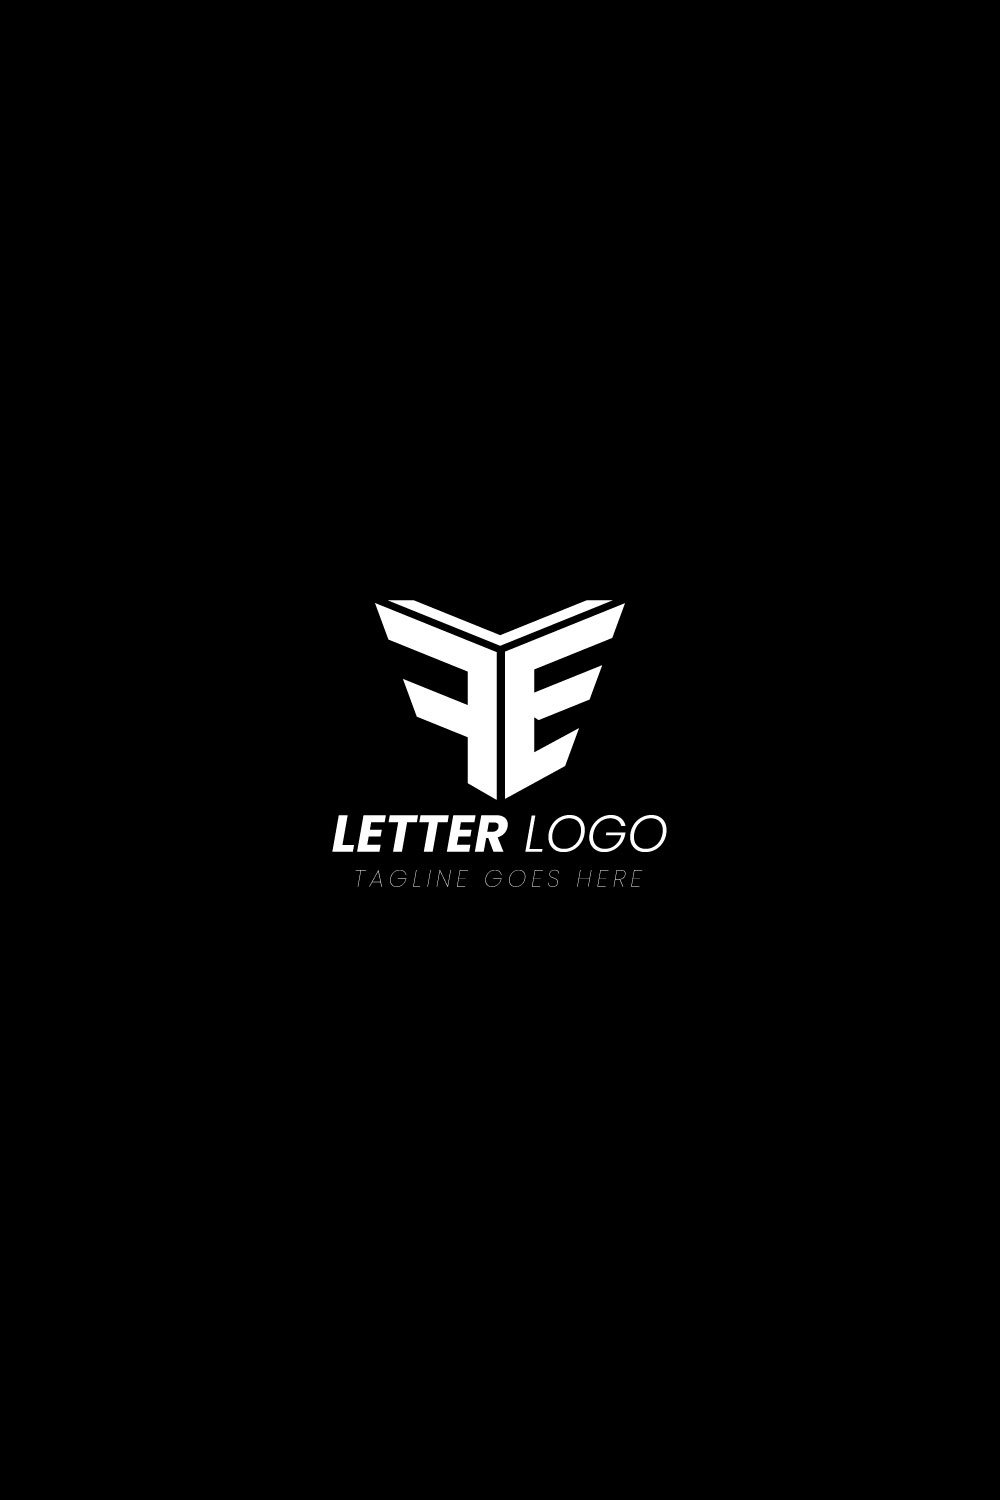 FE-logo vector image pinterest preview image.